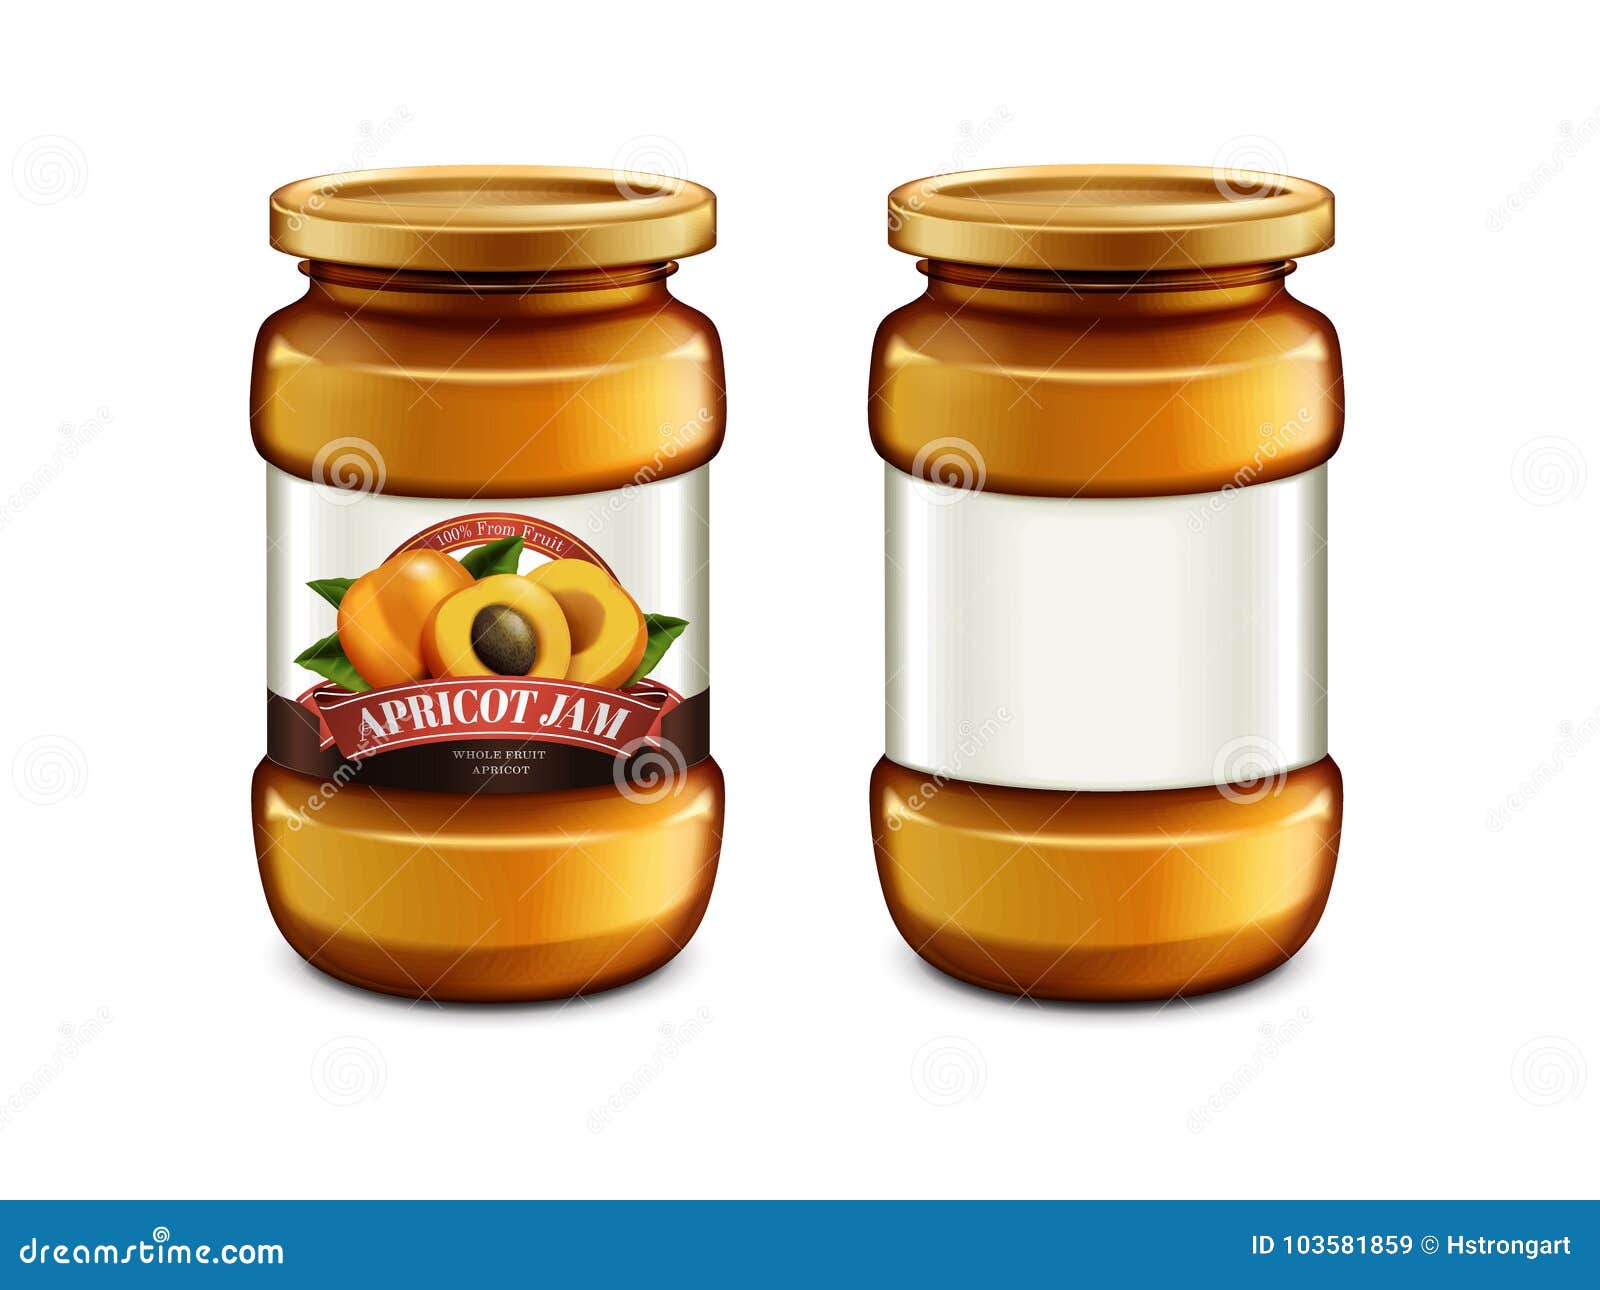 Download Apricot Jam glass jar stock illustration. Illustration of white - 103581859